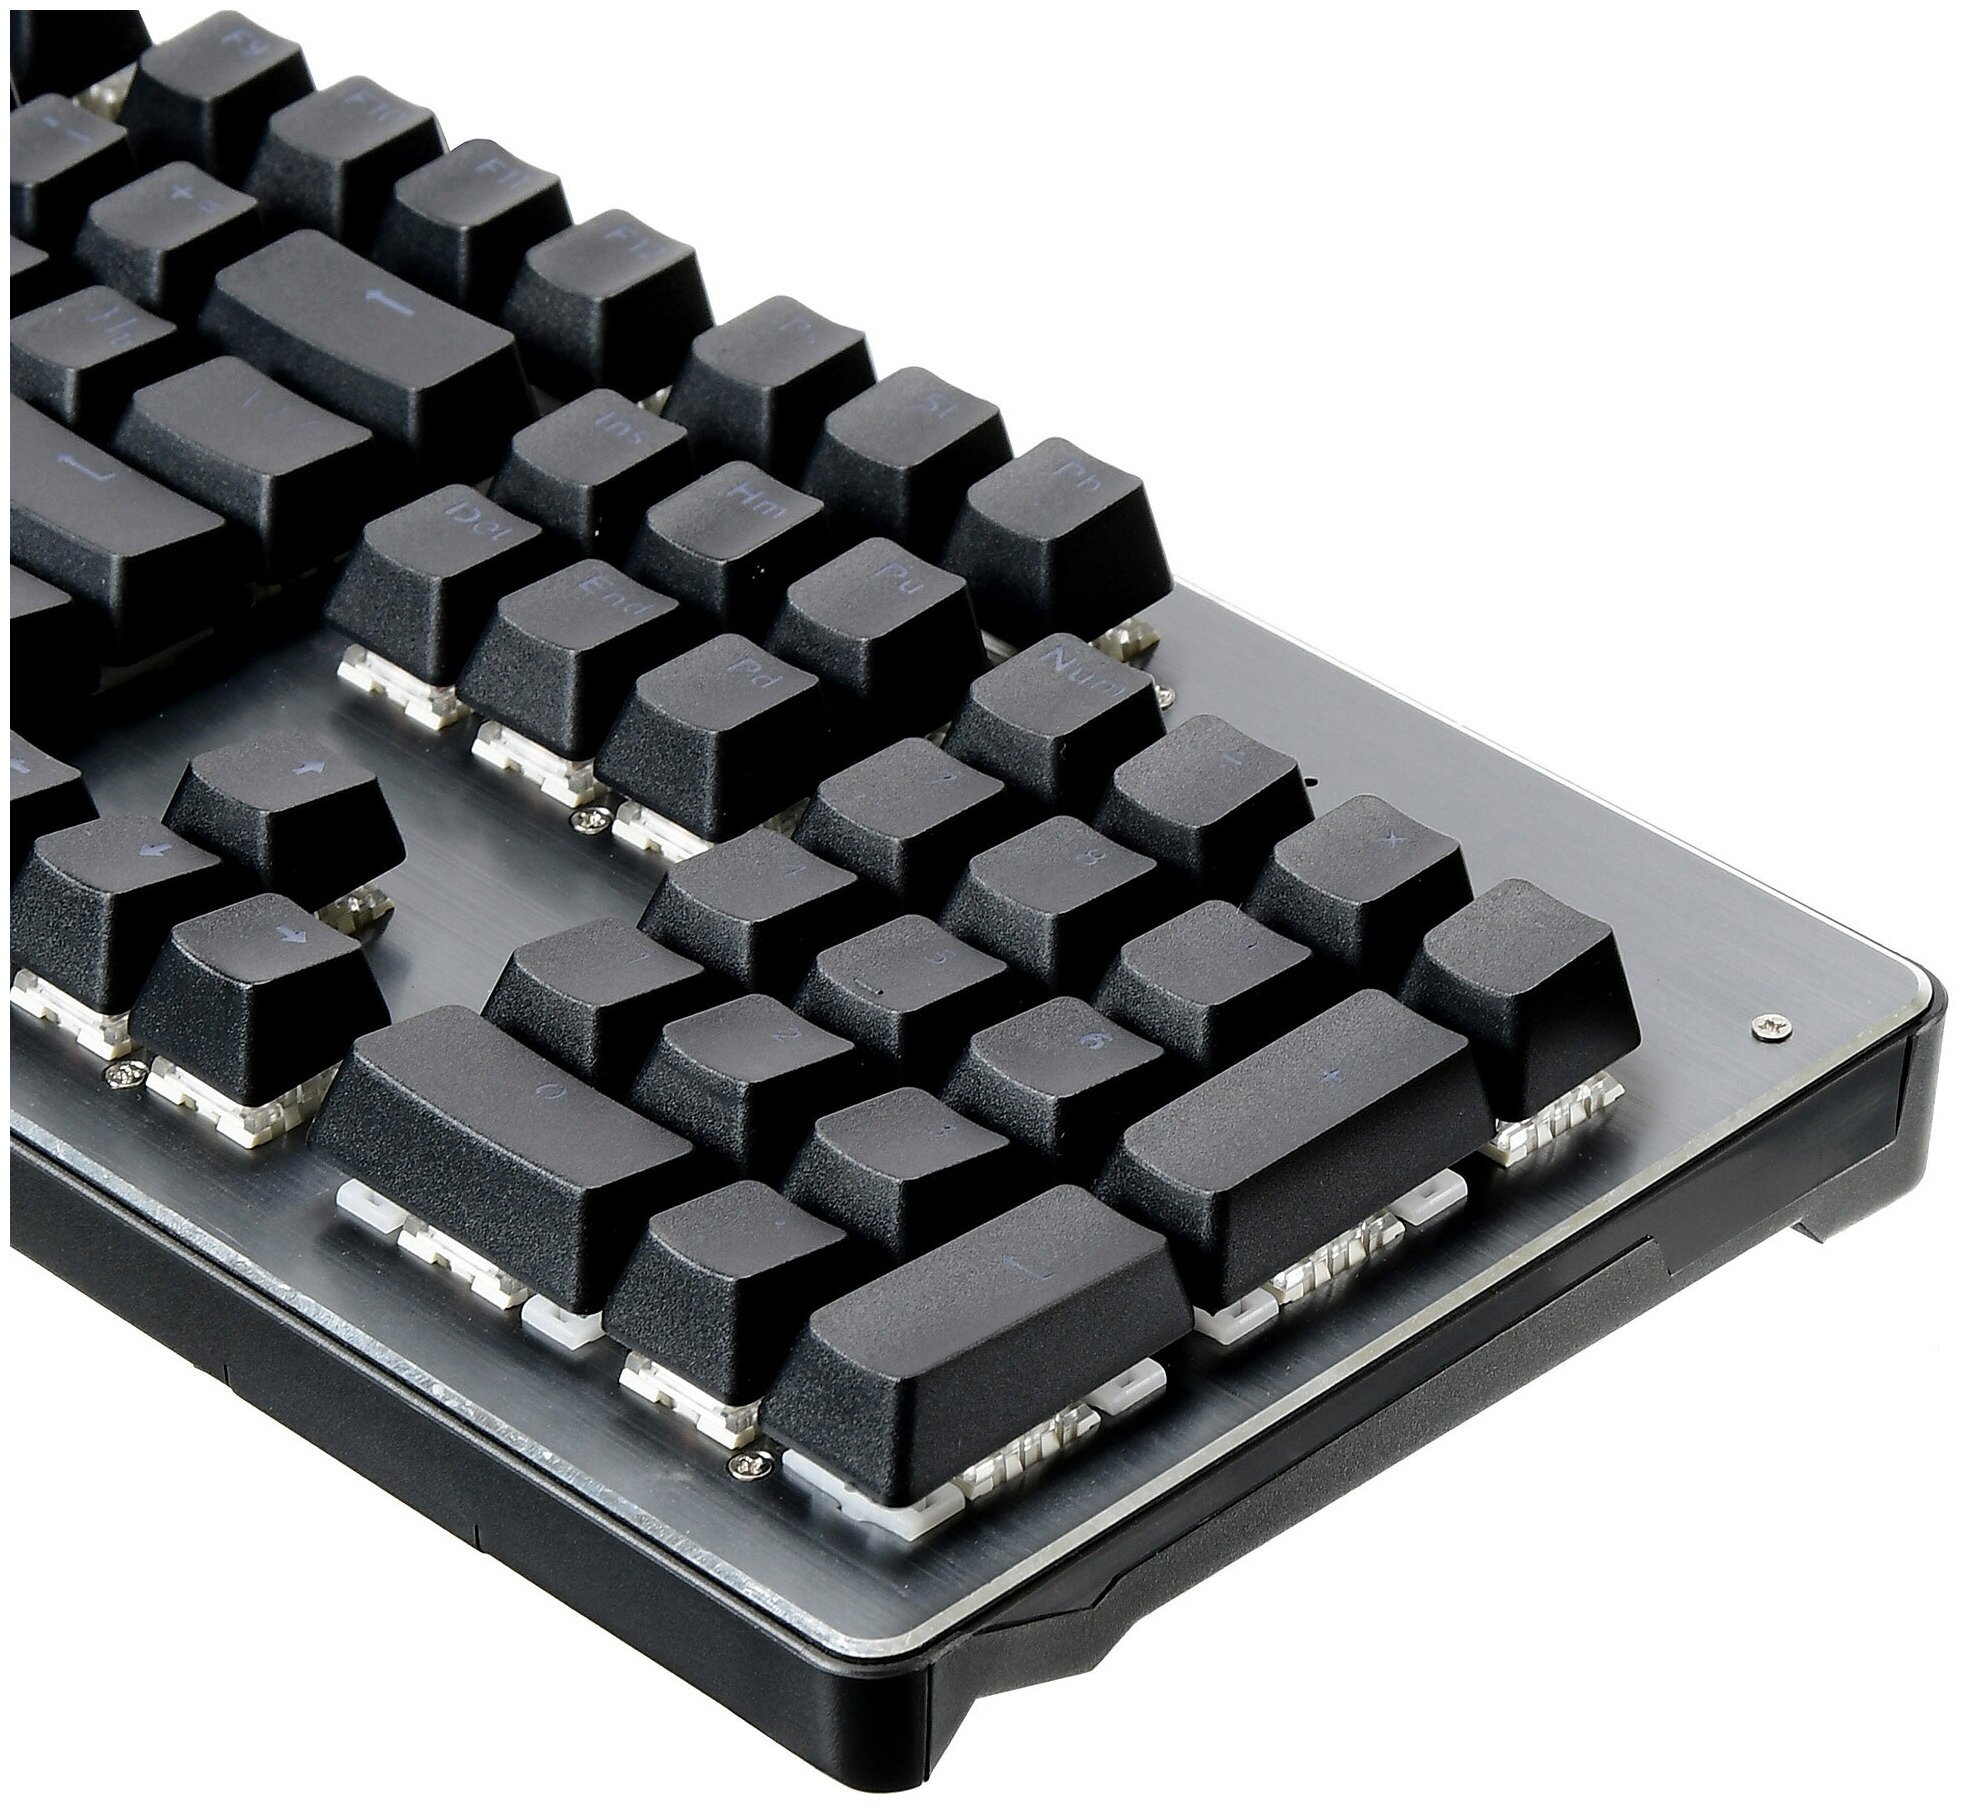 Клавиатура Оклик 970G Dark Knight черный/серебристый (499578)